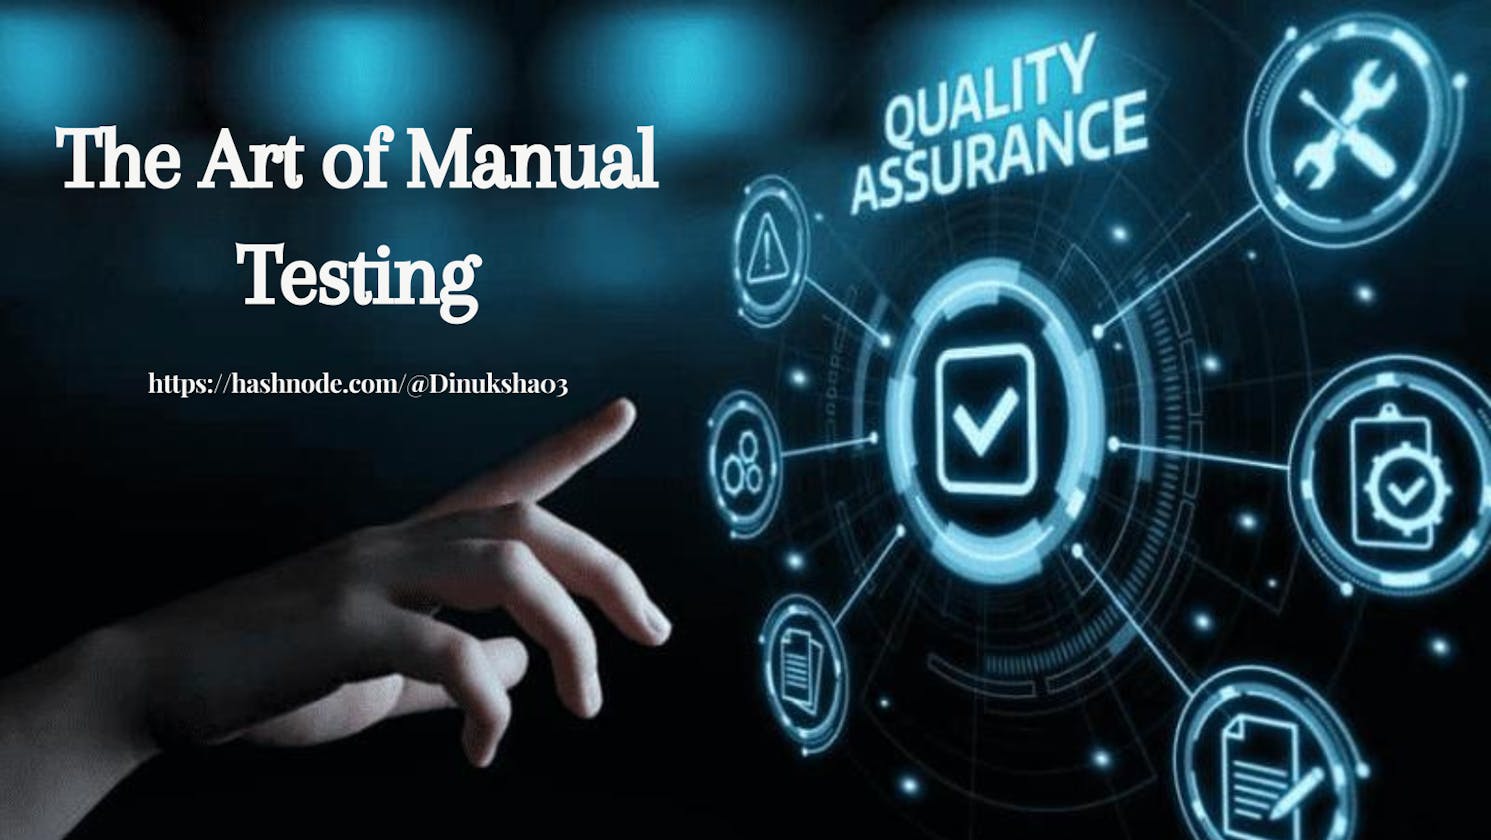 The Art of Manual Testing